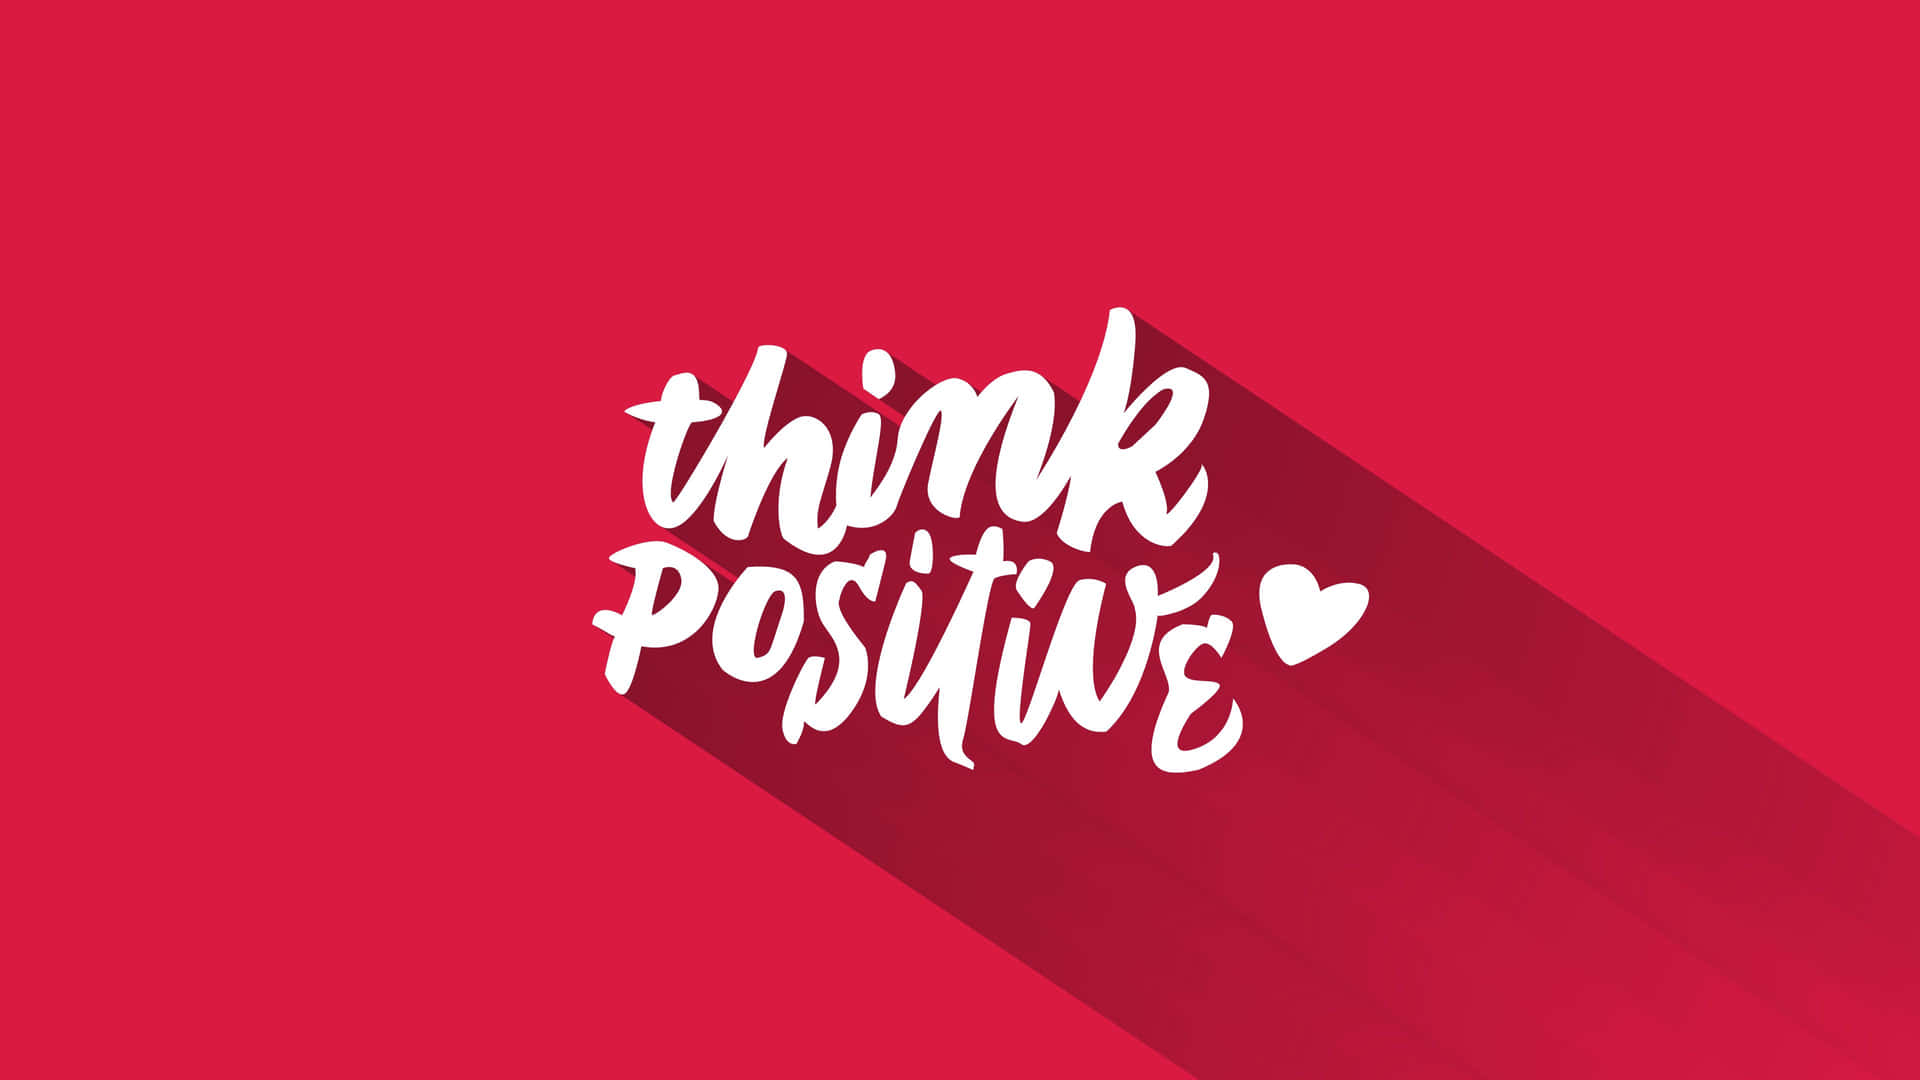 Think Positive Hd Wallpaper Wallpaper